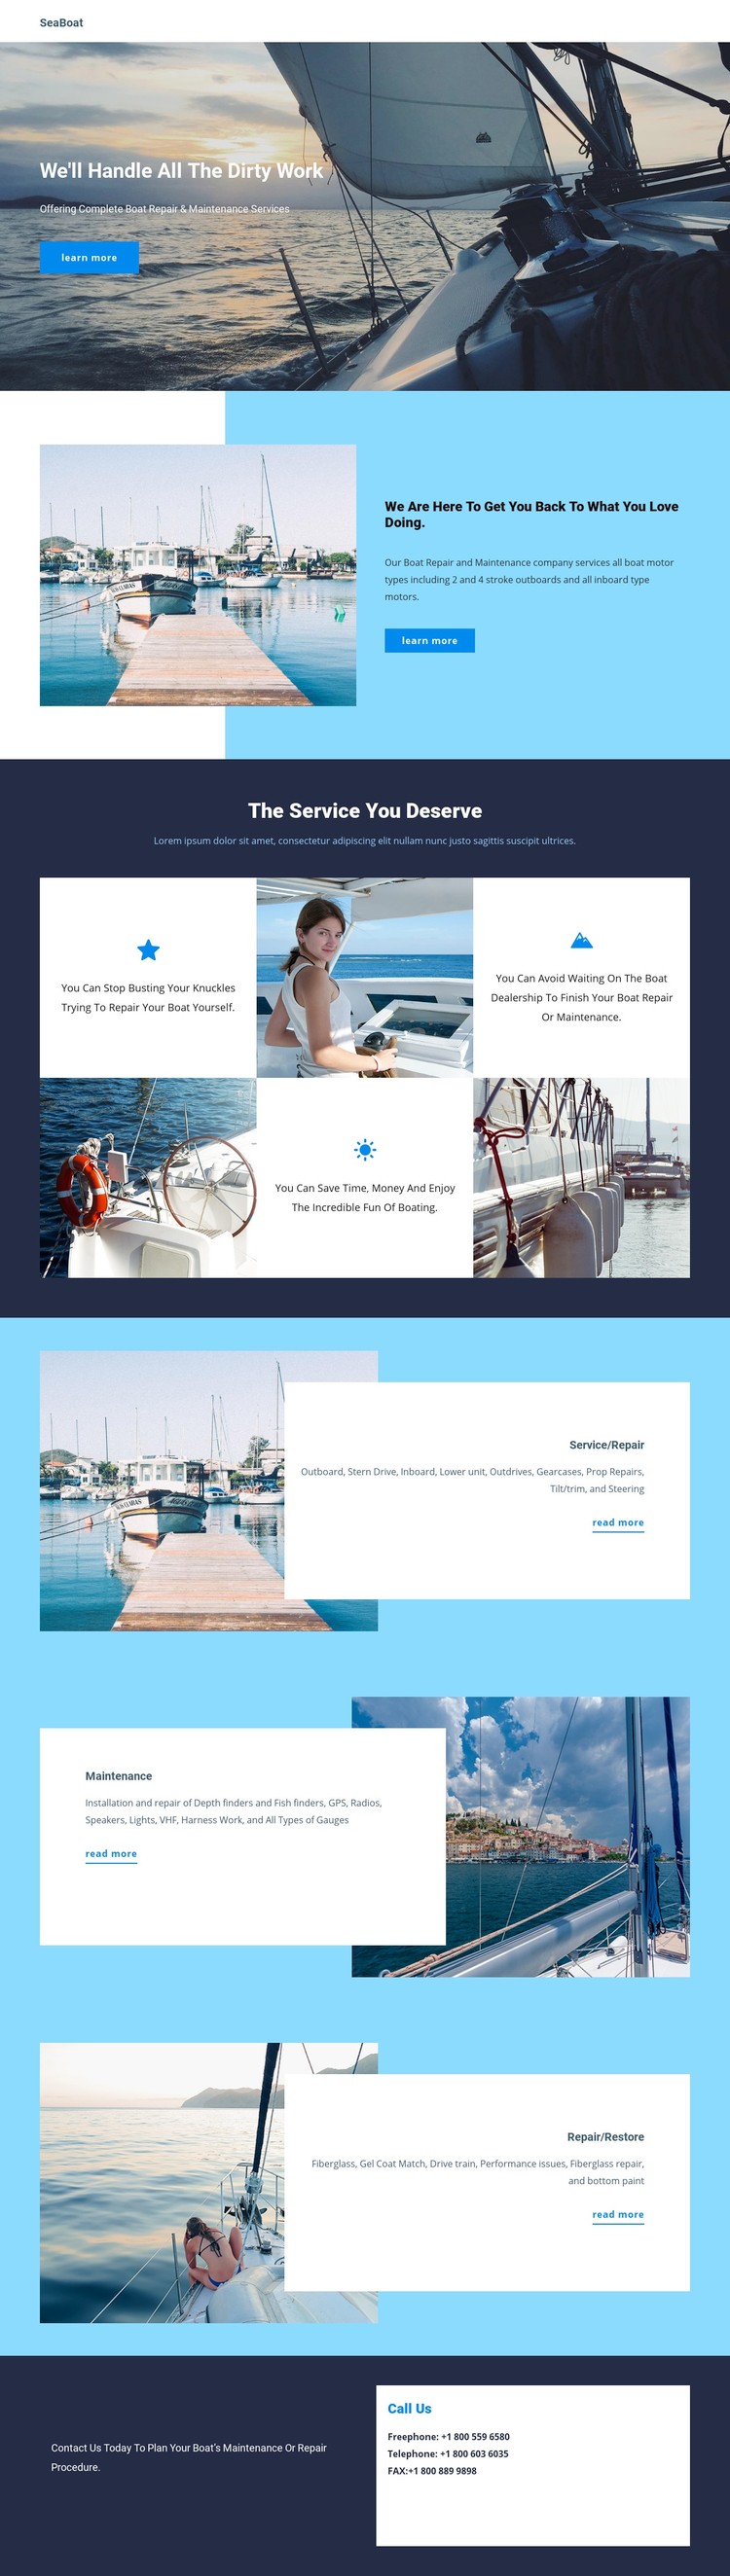 Travel on Seaboat Webflow Template Alternative